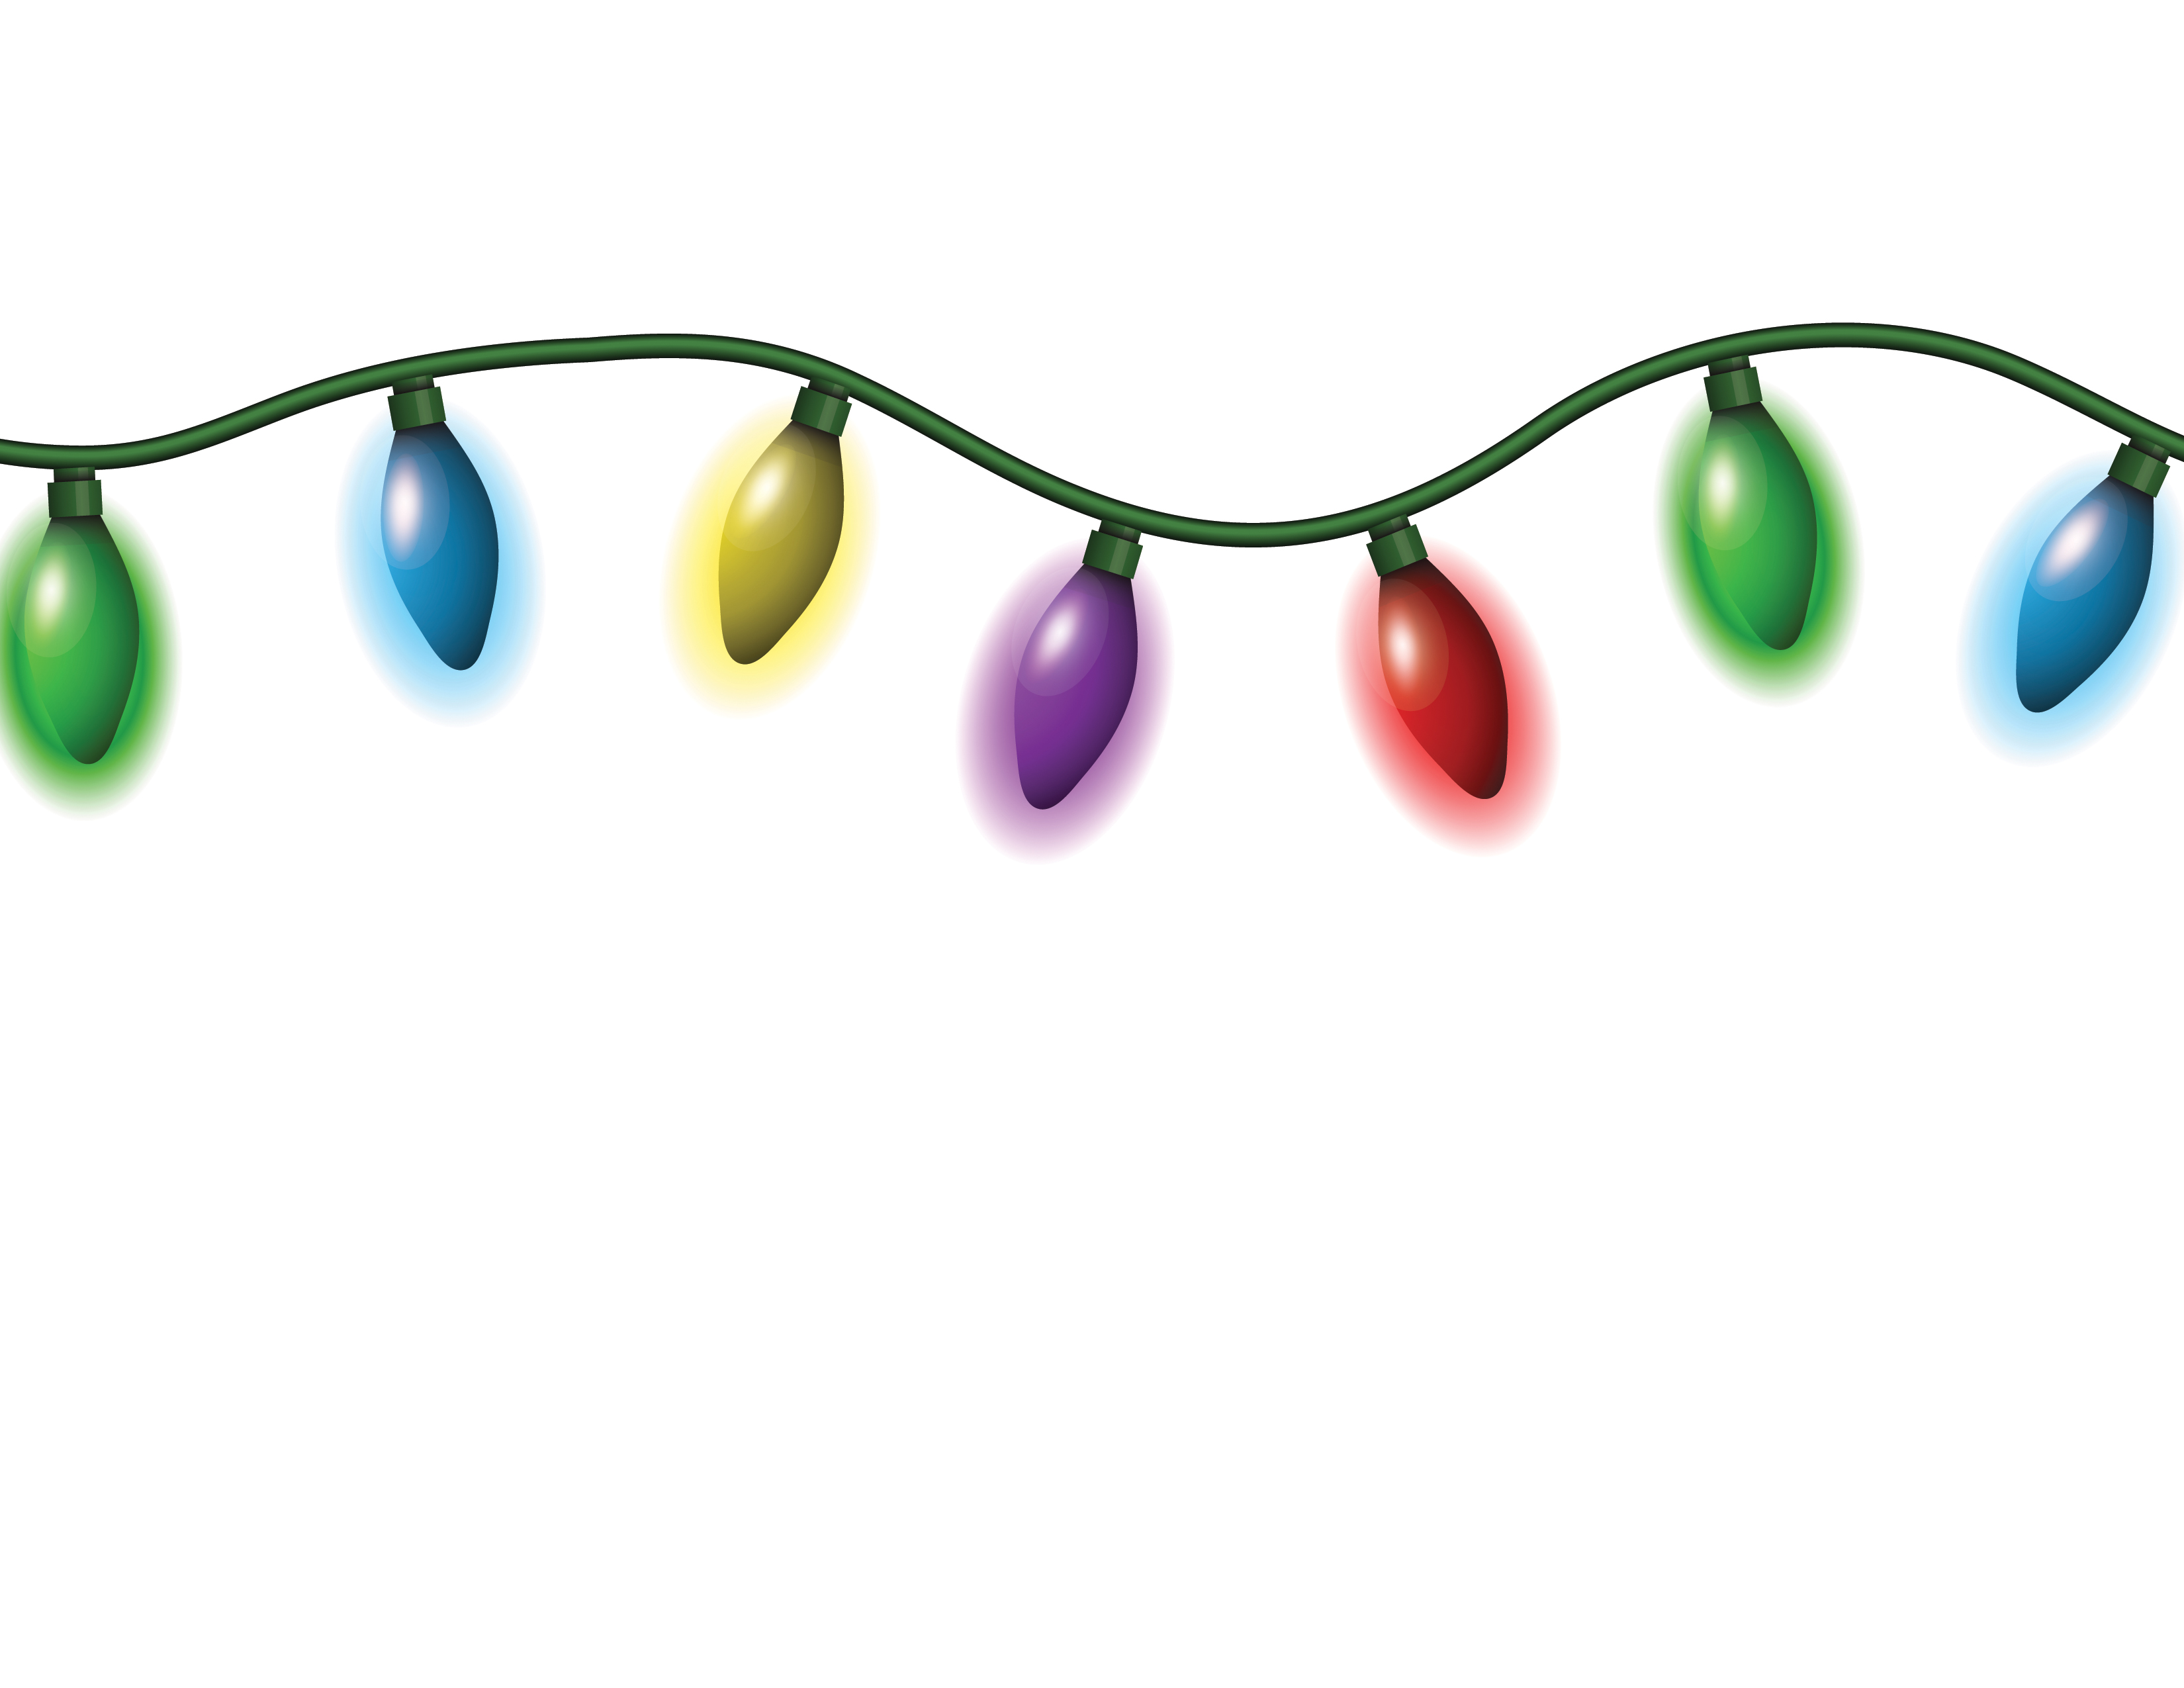 Christmas lights decorations clipart - ClipartFox